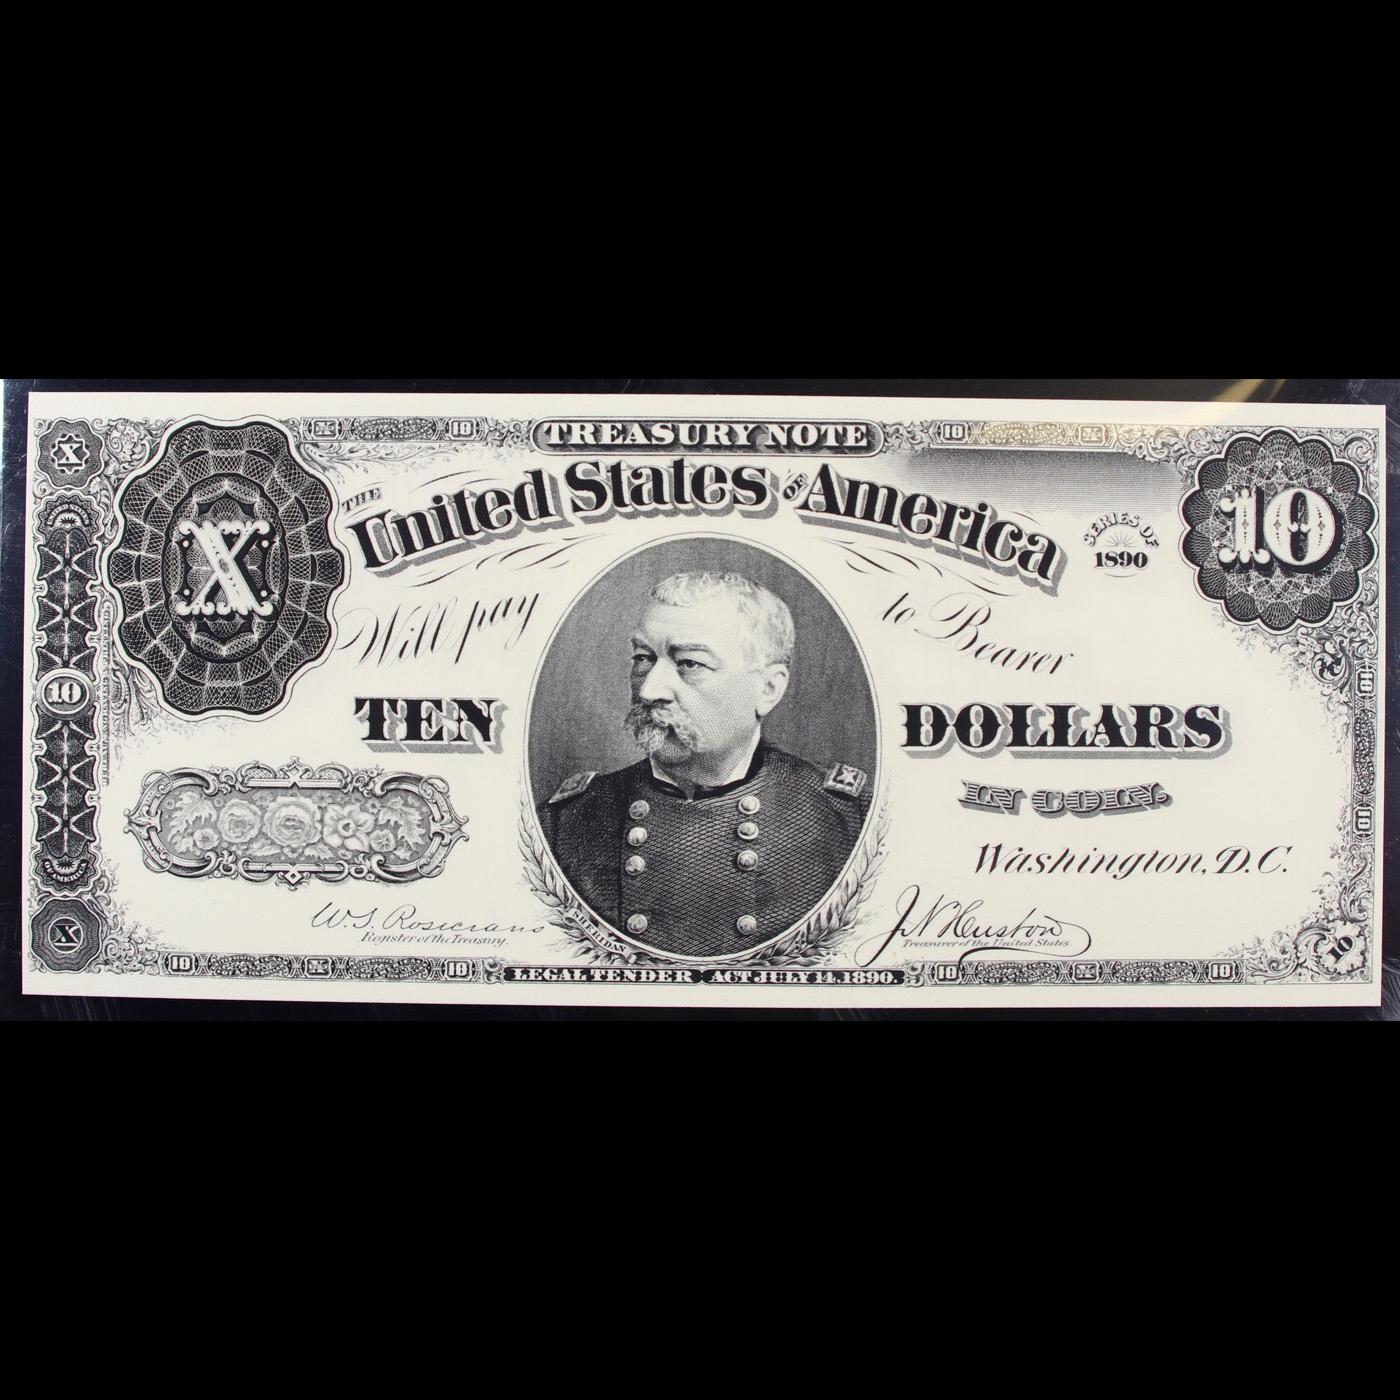 PCGS 1890 $10 Bureau of Engraving & Printing Treasury Note Graded cu64 PPQ By PCGS